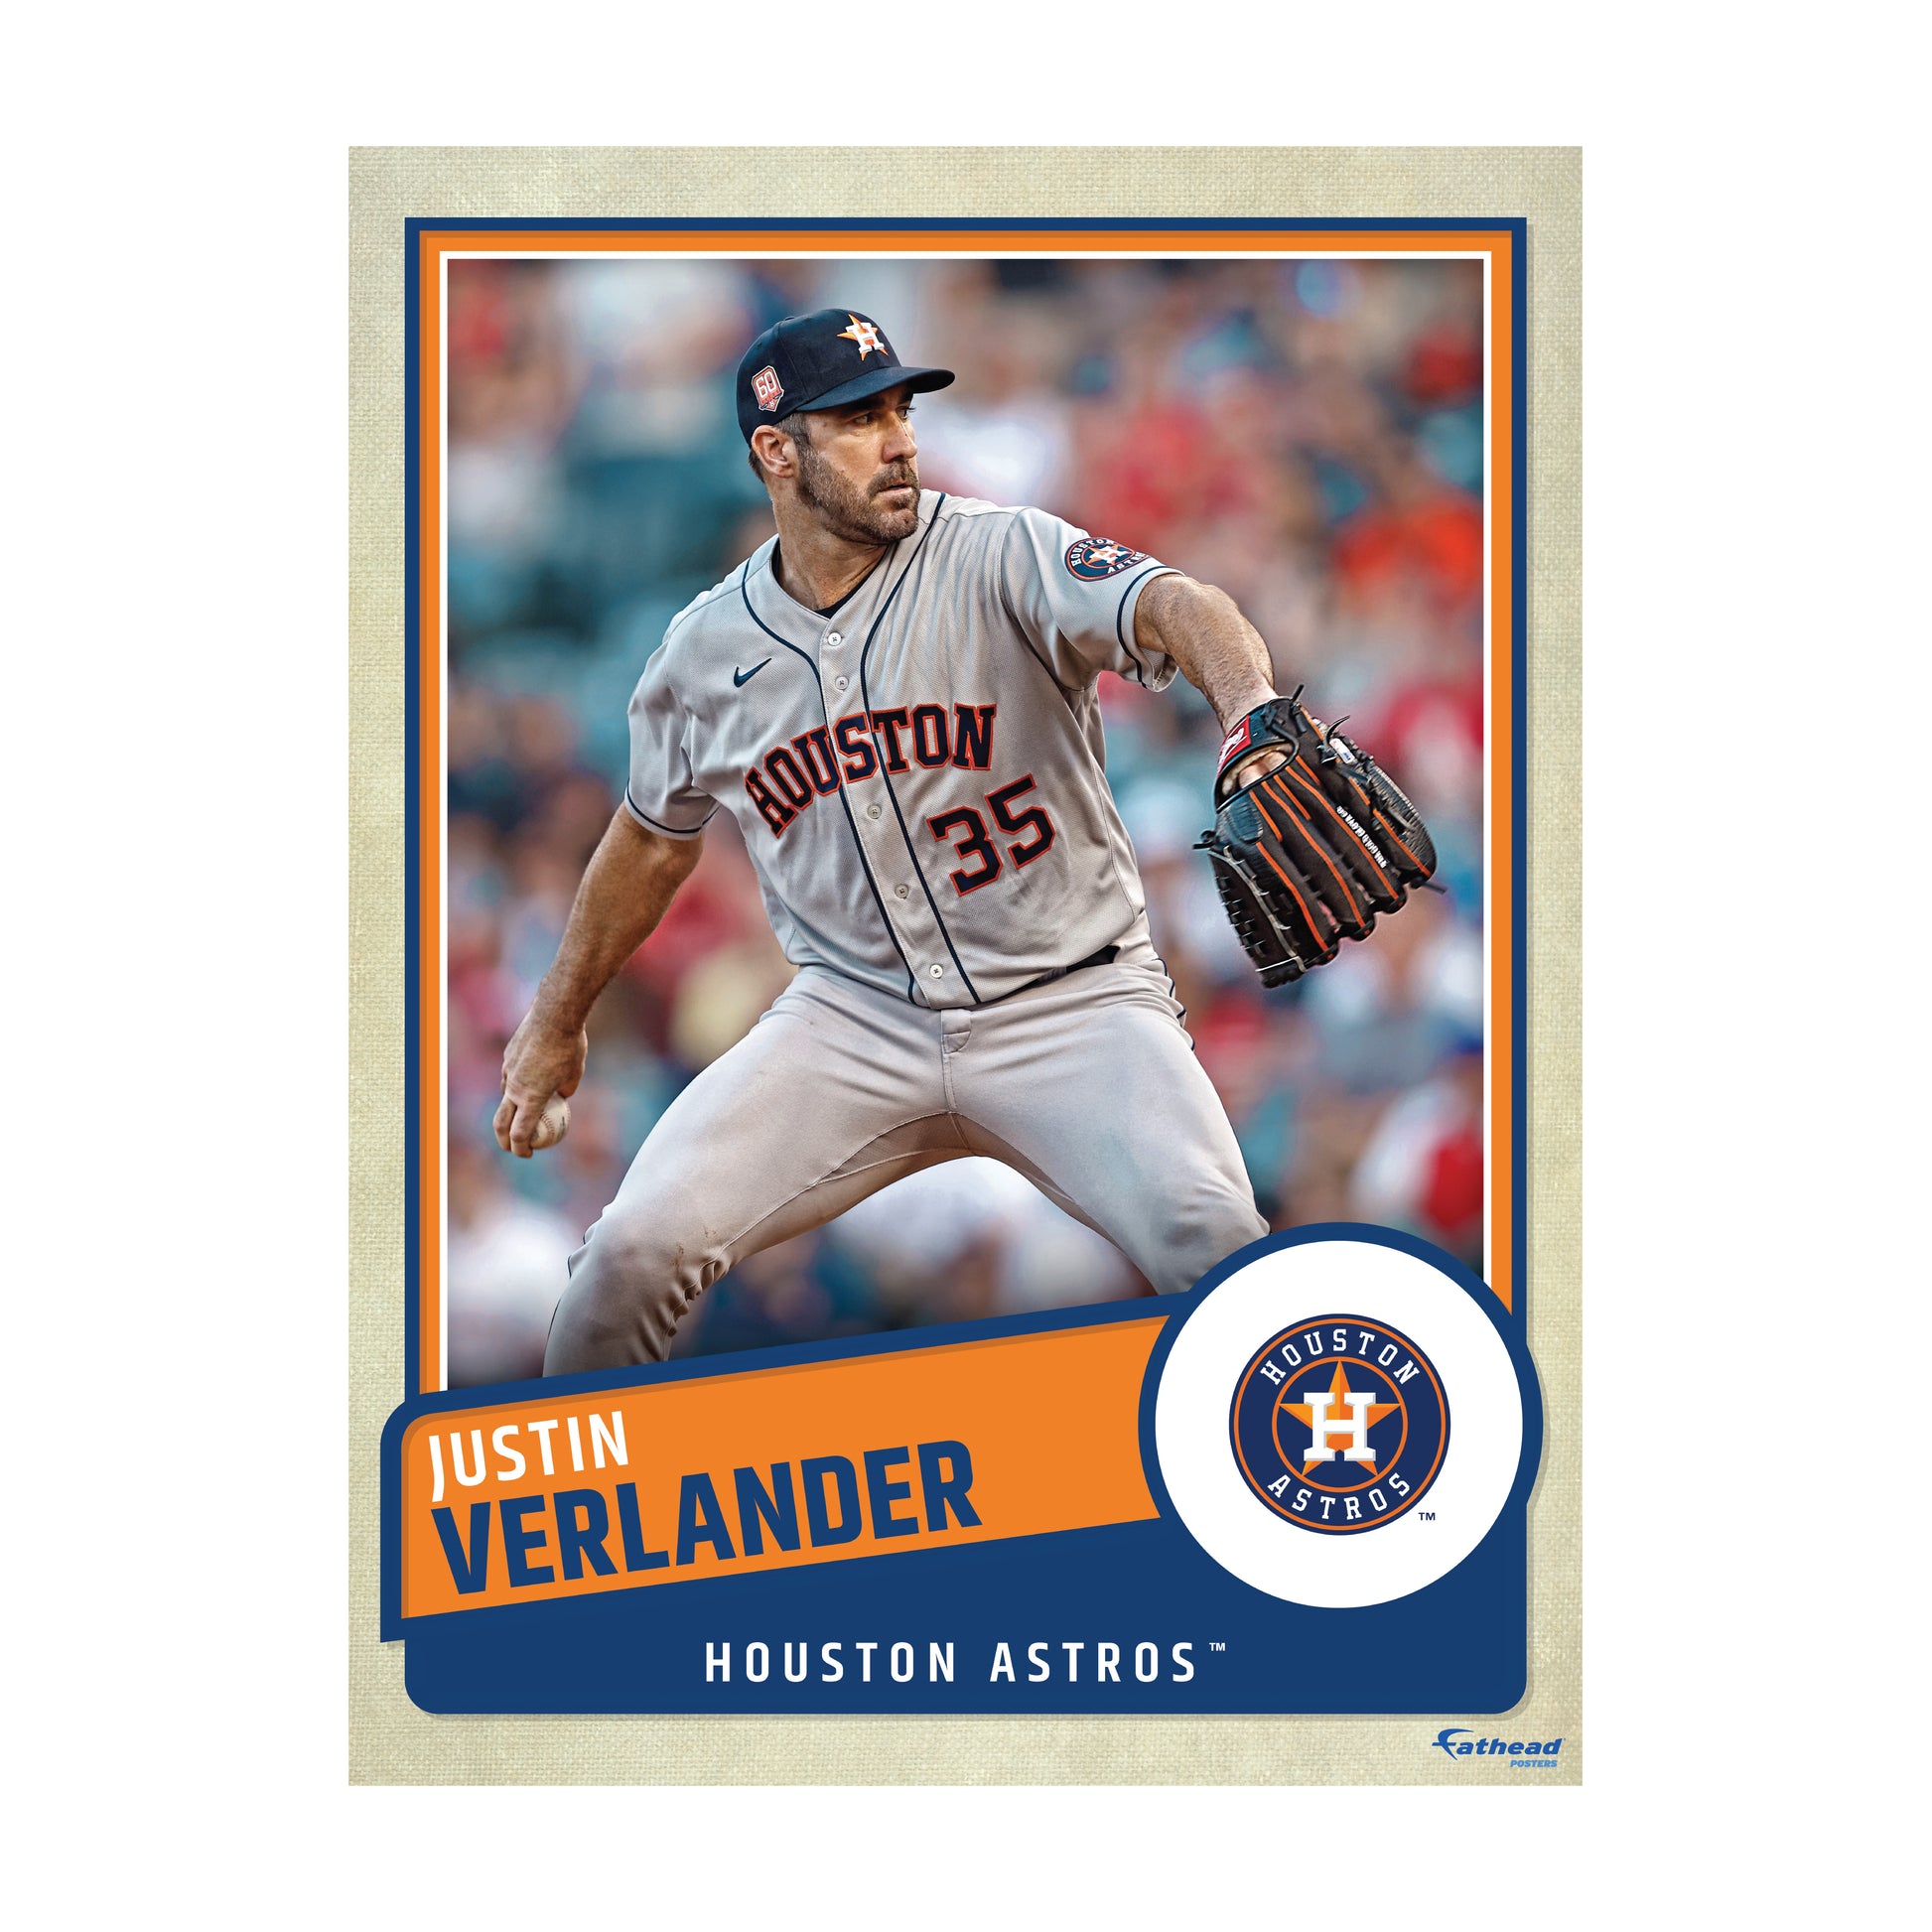 Houston Astros: Justin Verlander 2022 Poster - Officially Licensed